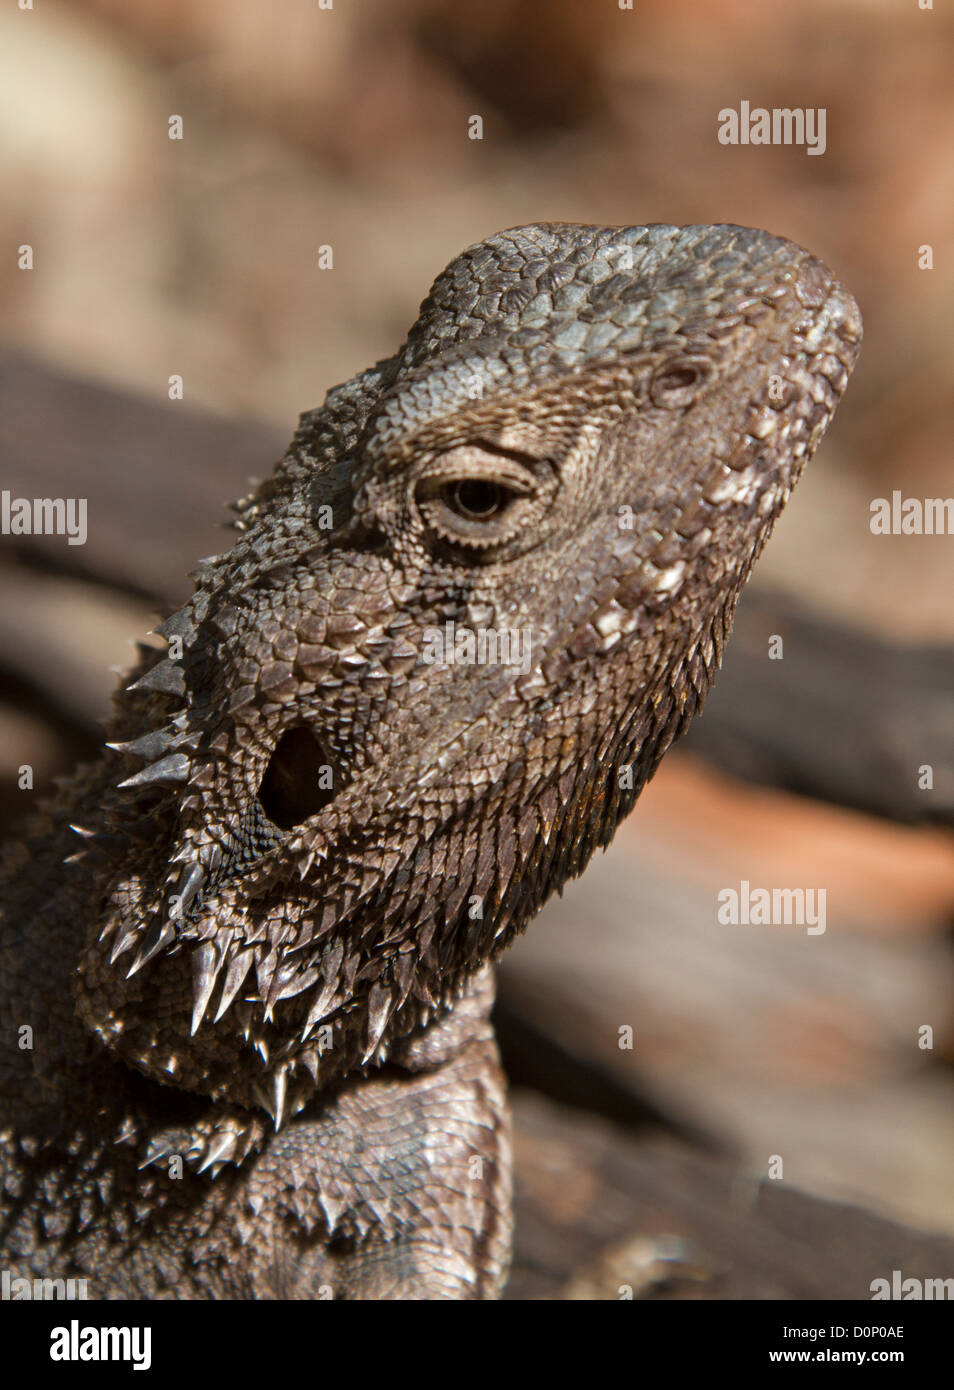 Close up of face of Australian eastern bearded dragon lizard - Pogona barbata Stock Photo